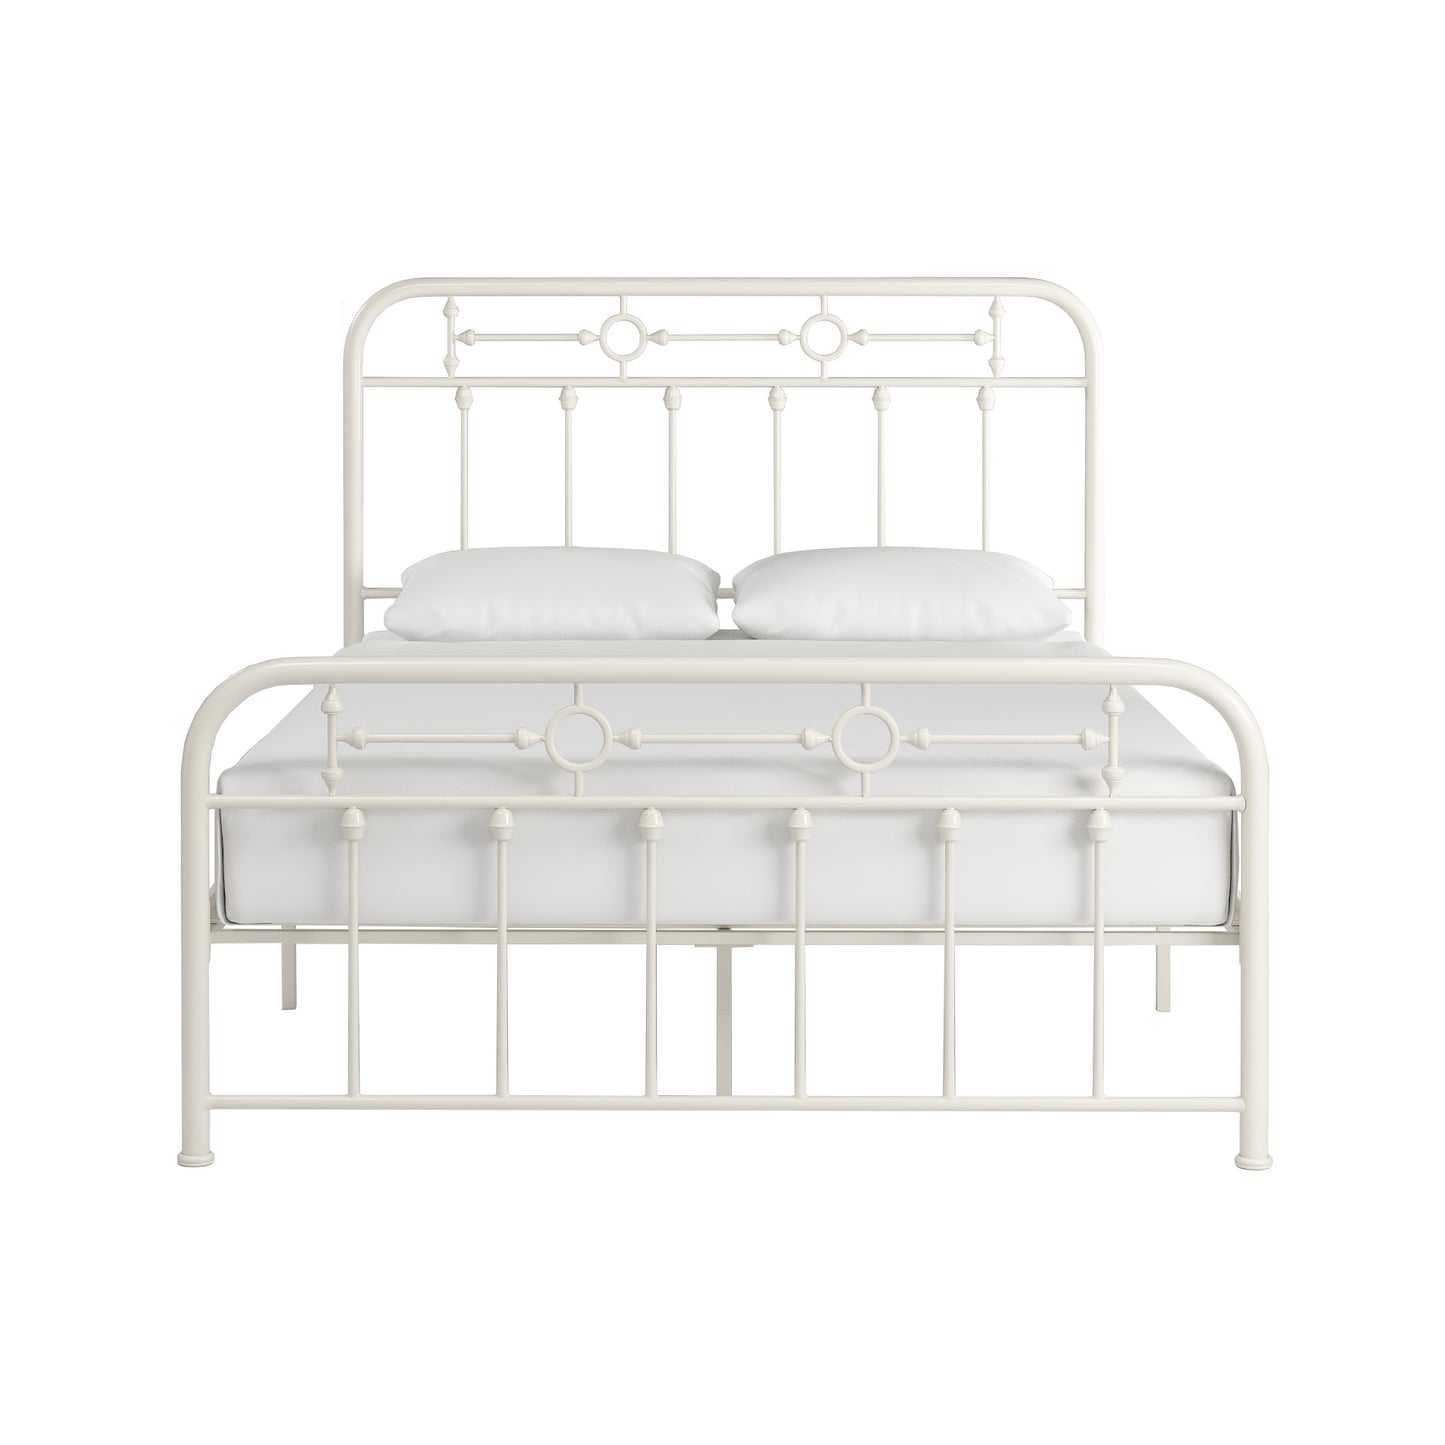 Metal Spindle Platform Bed - White, Full Size (Full Size)